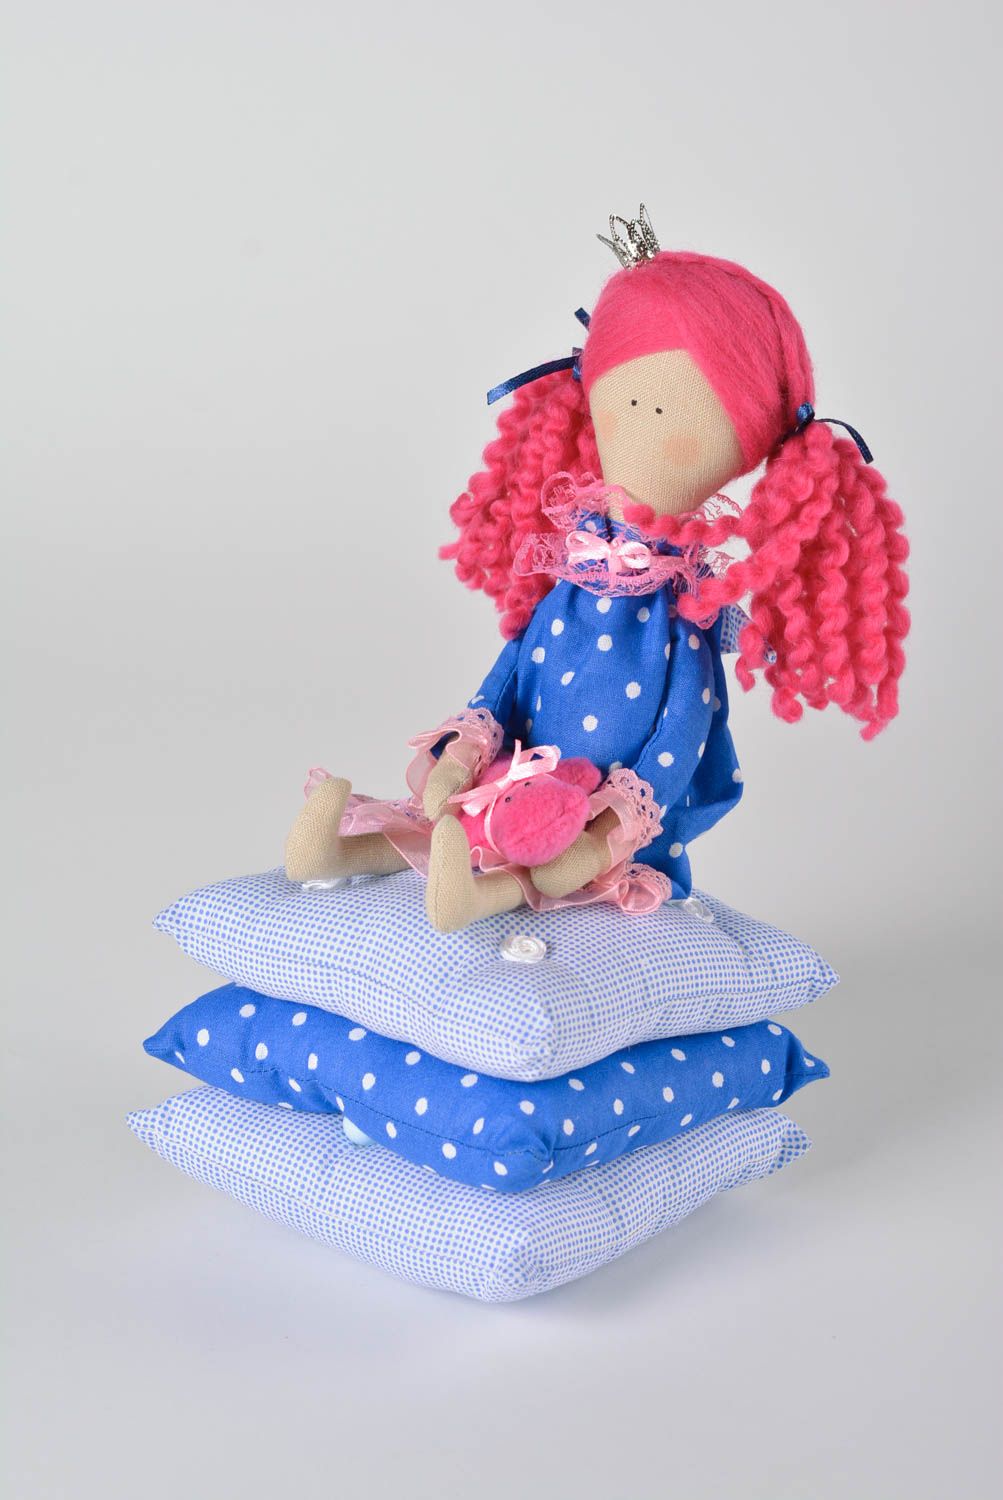 Decorative fabric doll handmade stuffed toy present for baby nursery decor photo 1